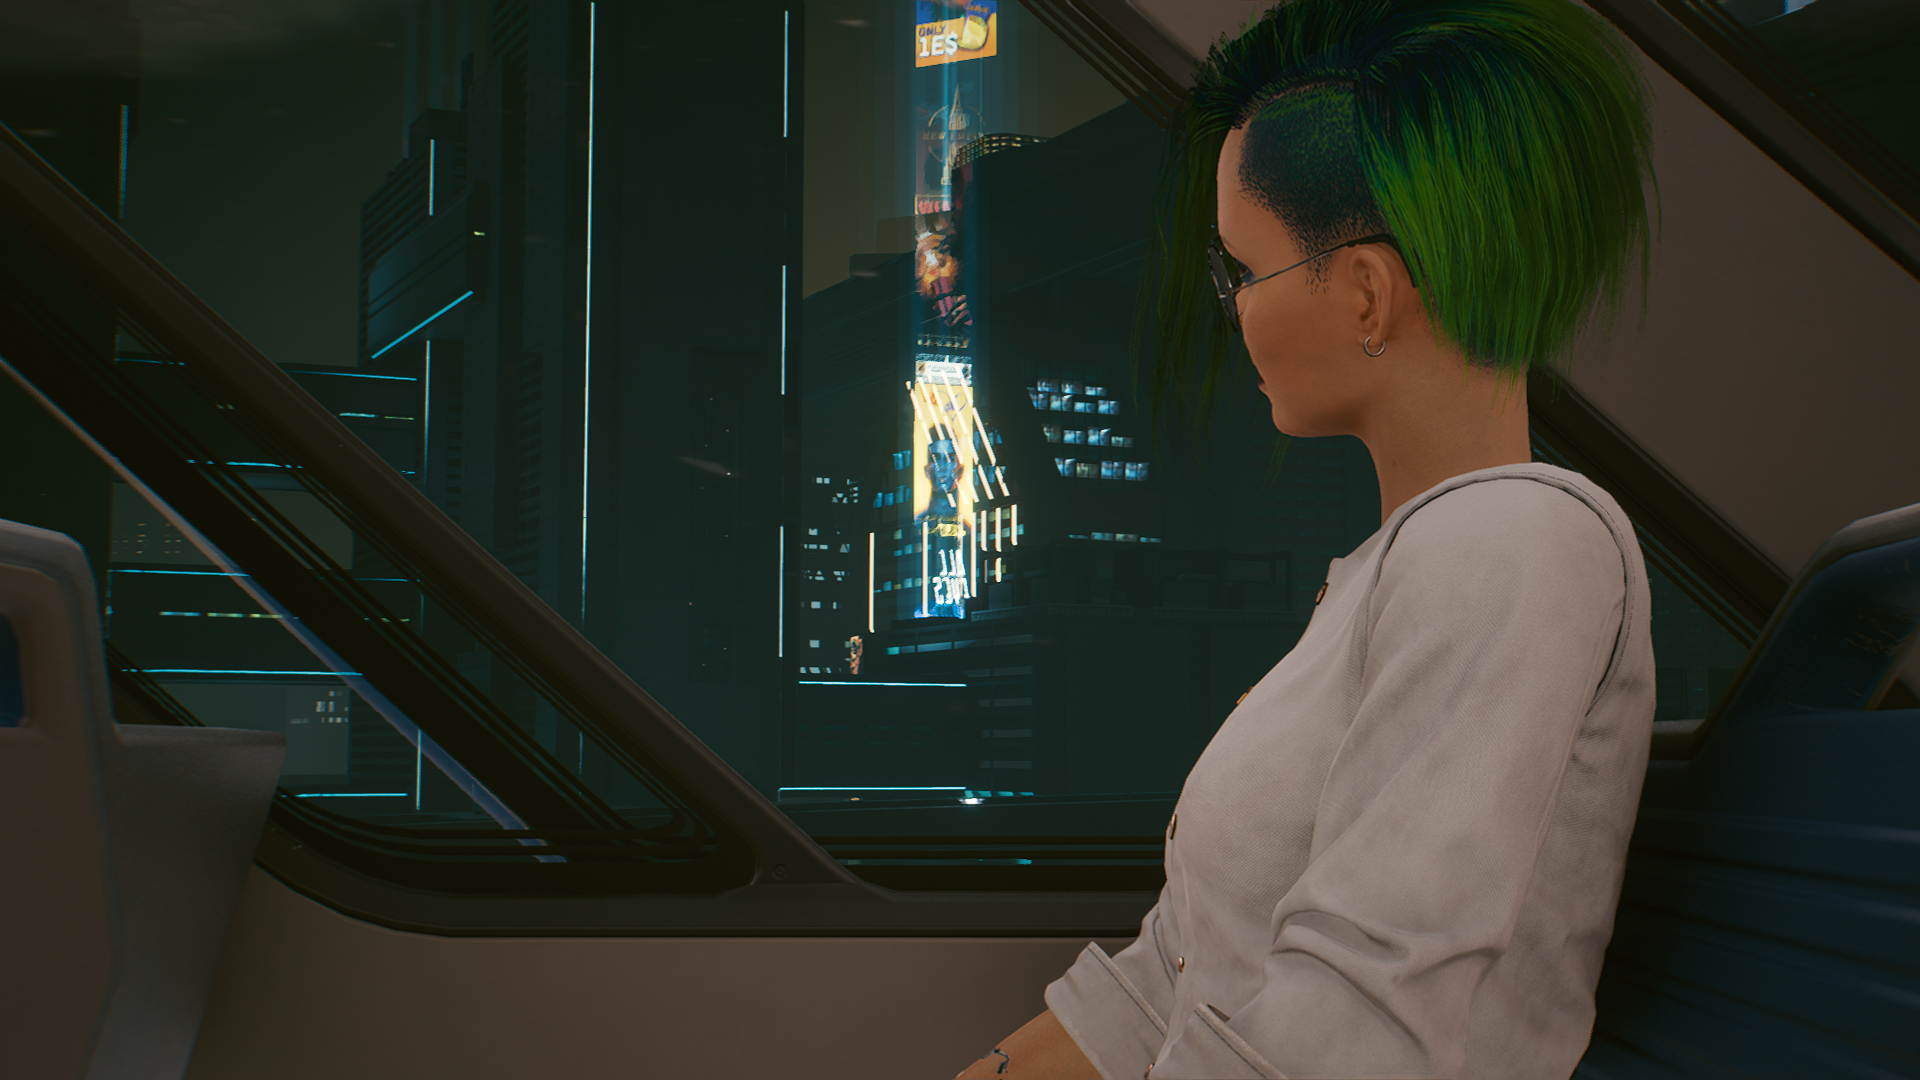 General 1920x1080 Cyberpunk 2077 video games green hair women science fiction women PC gaming video game girls V (Cyberpunk 2077) screen shot